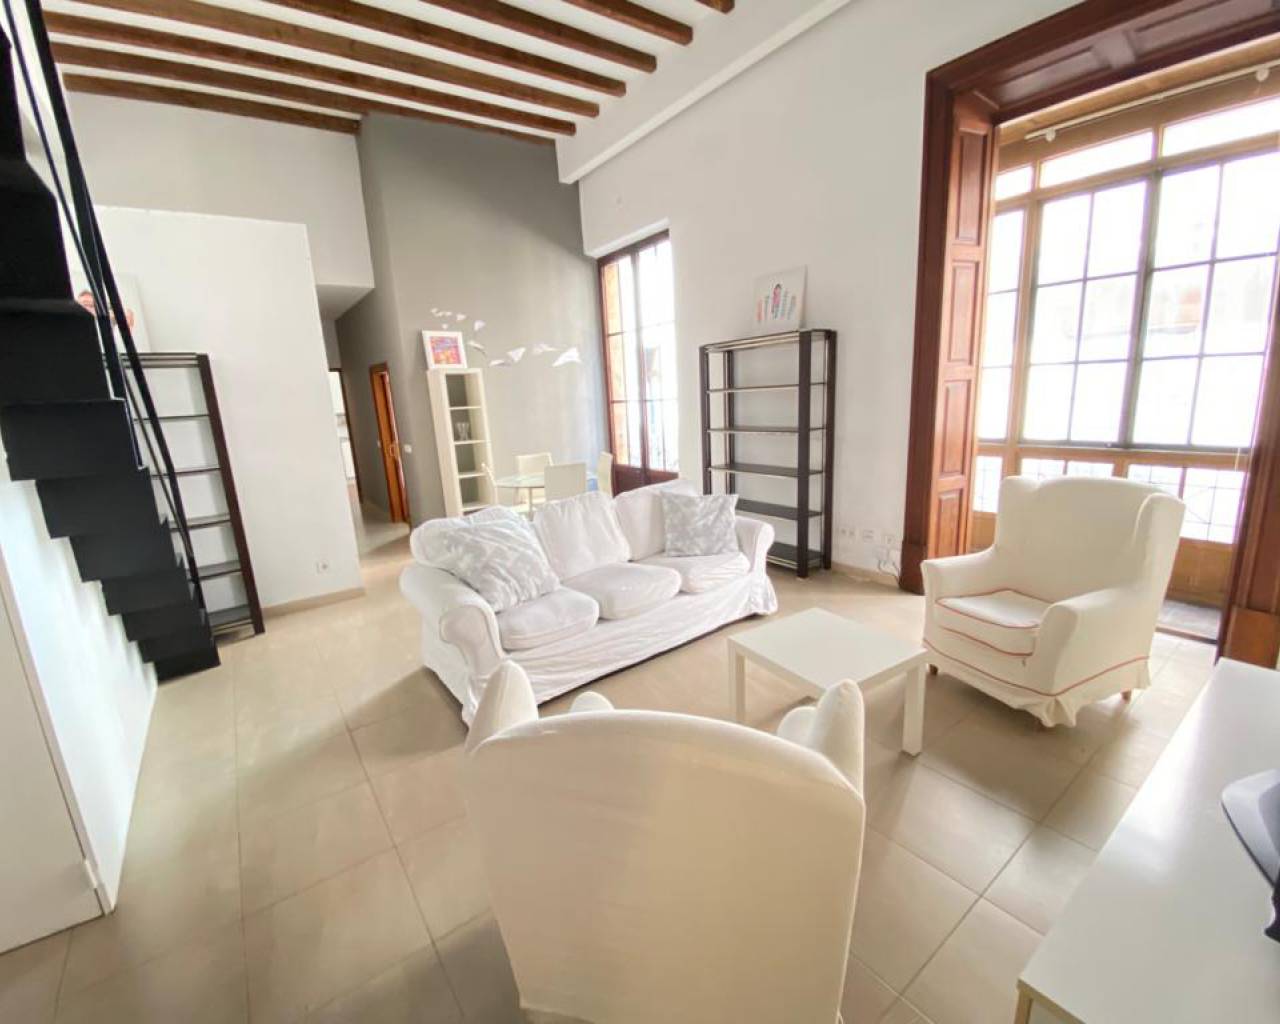 Apartment for rent in Palma de Mallorca